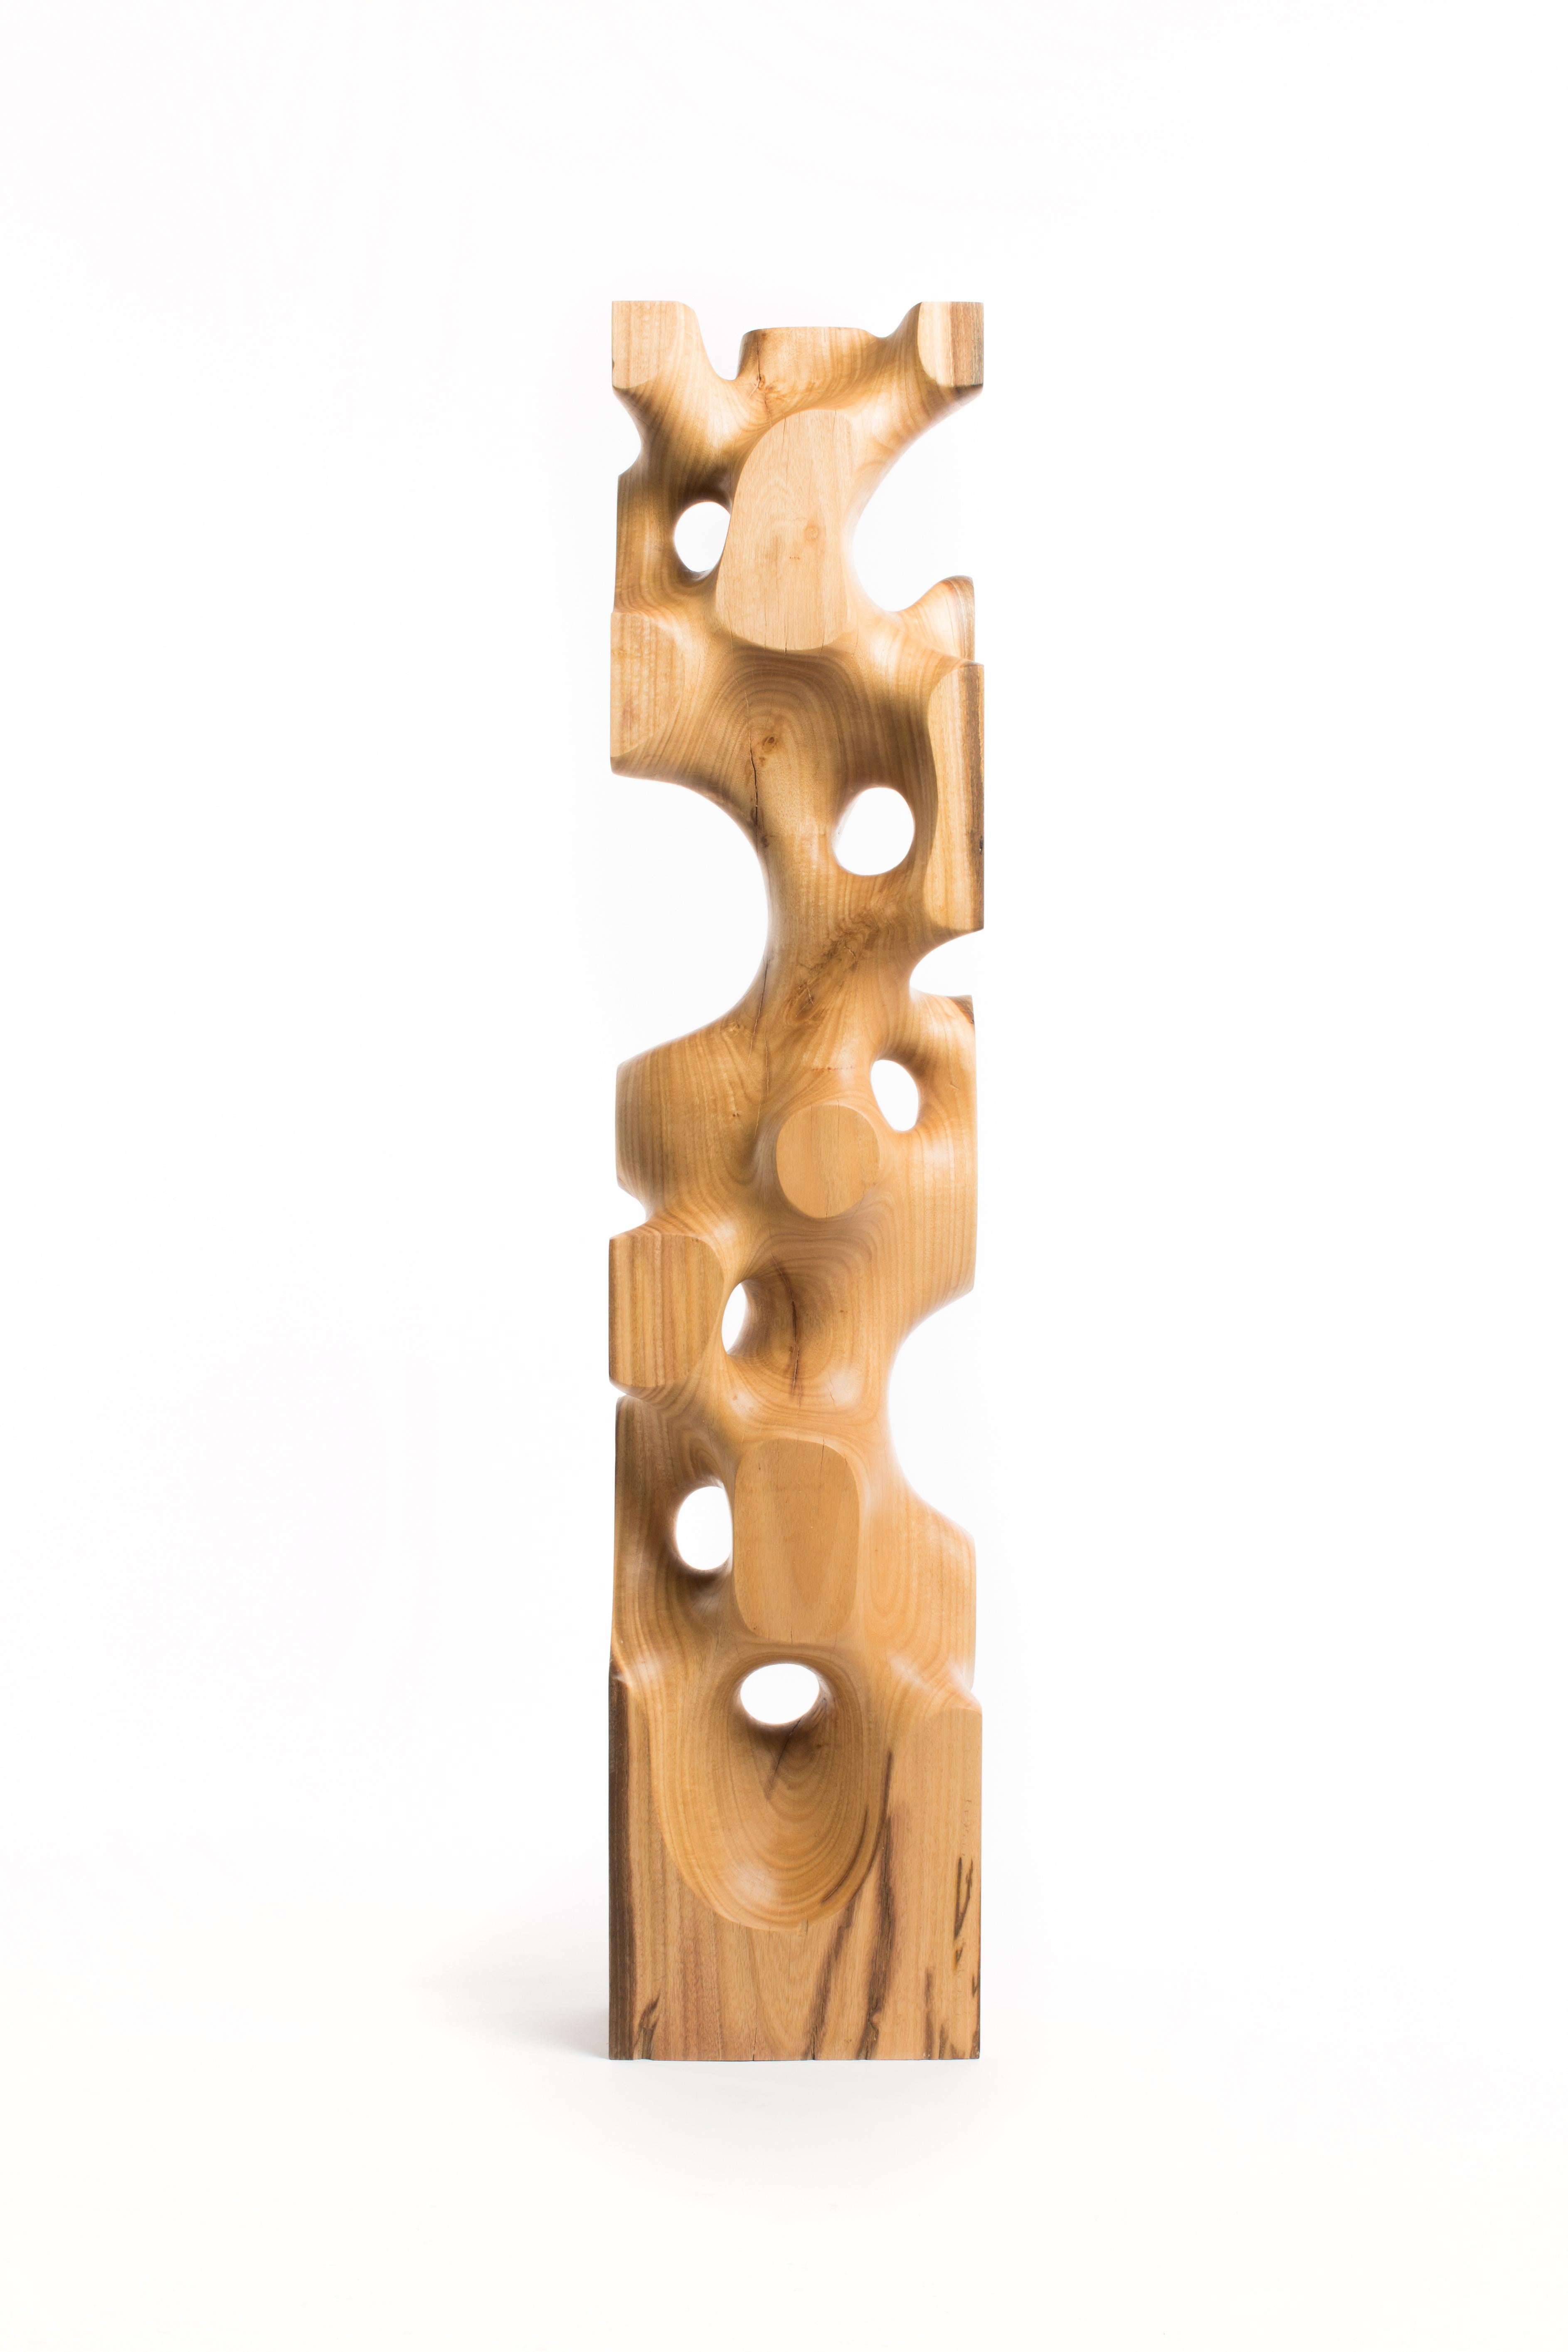 Driaan Claassen for Reticence, Abstract Geometric Sculpture, Wooden Cuboid 009 2